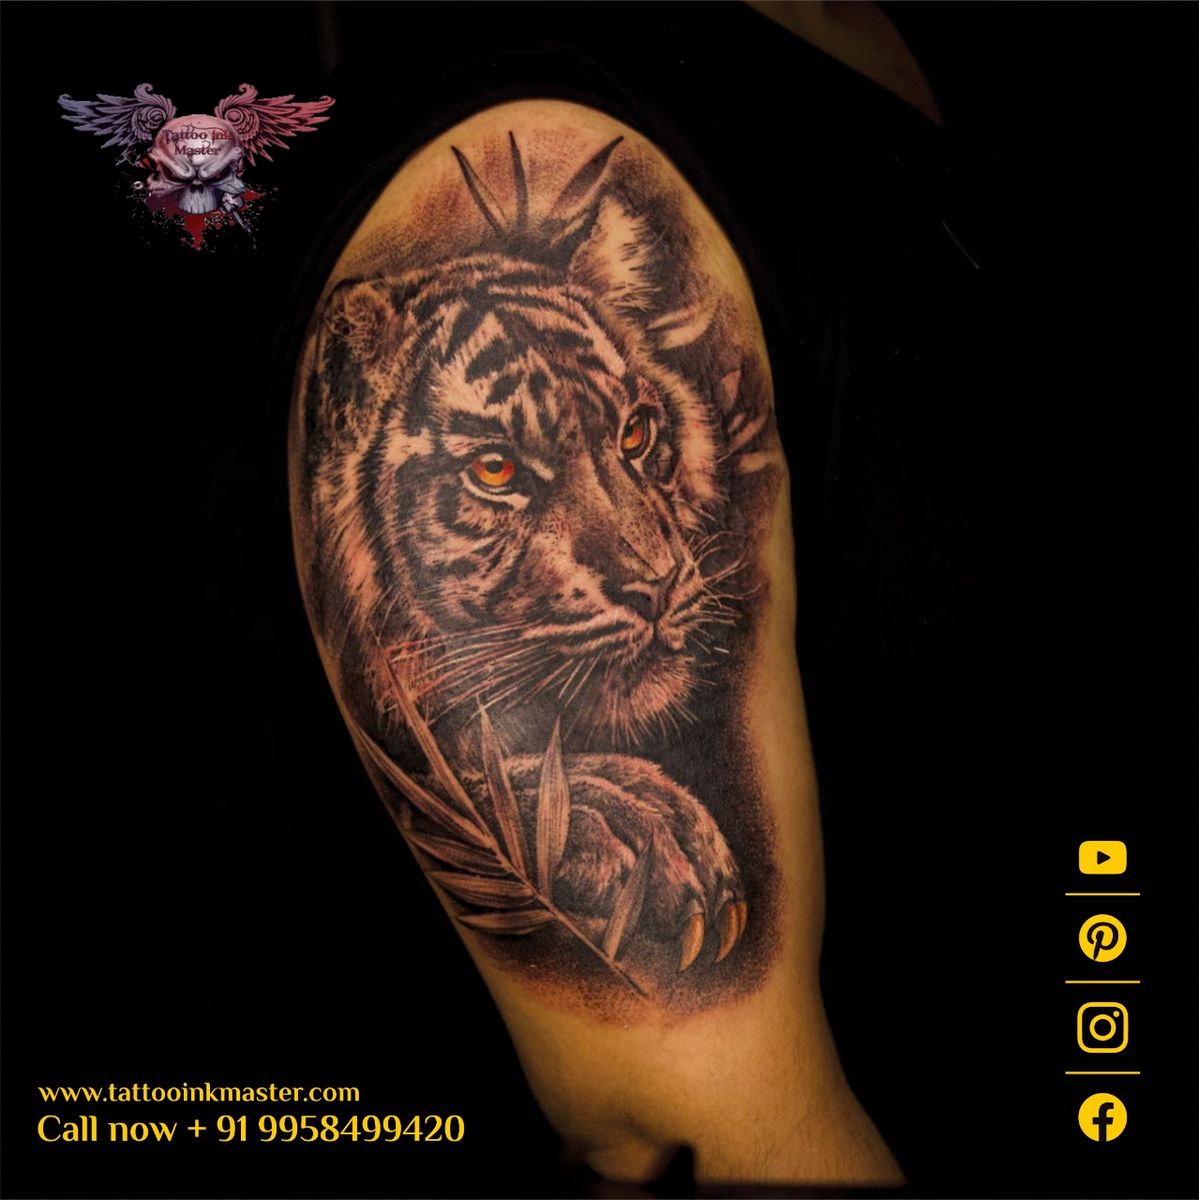 3D Temporary Tattoo Waterproof Sticker Beautiful Colourful Big Tiger  Leopard Fac | eBay